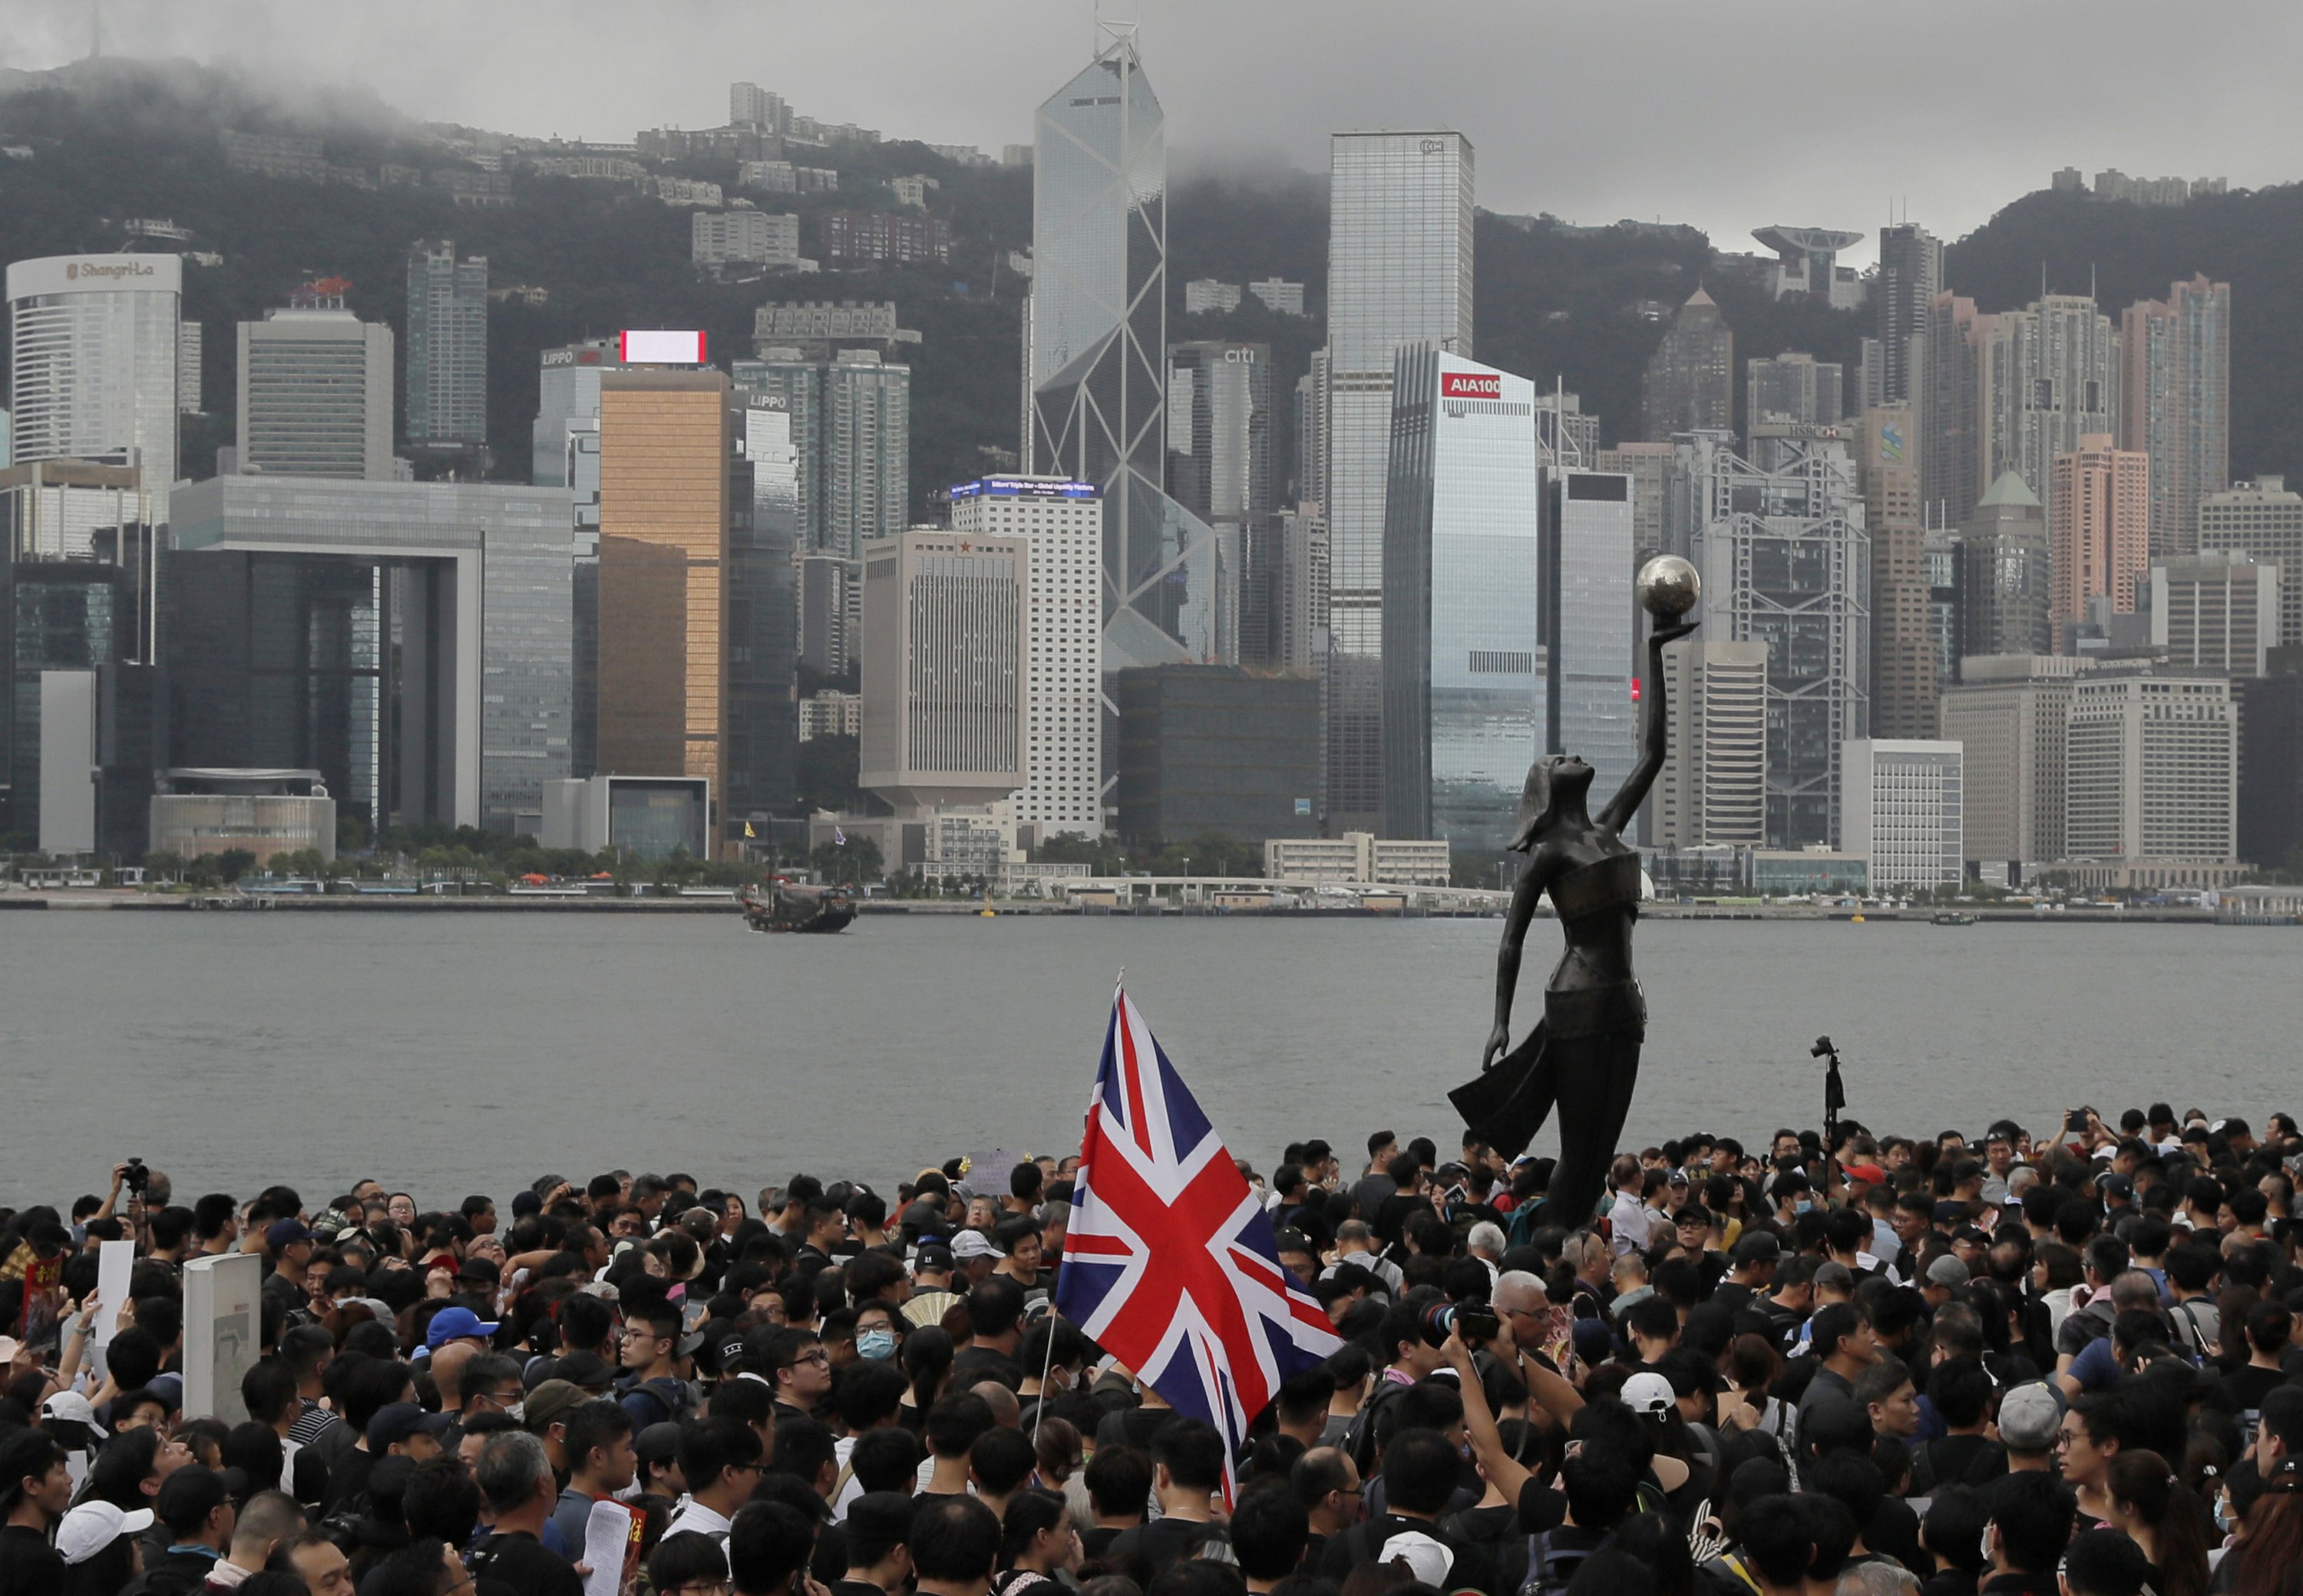 Thousands flee Hong Kong for UK, fearing China crackdown - Associated Press